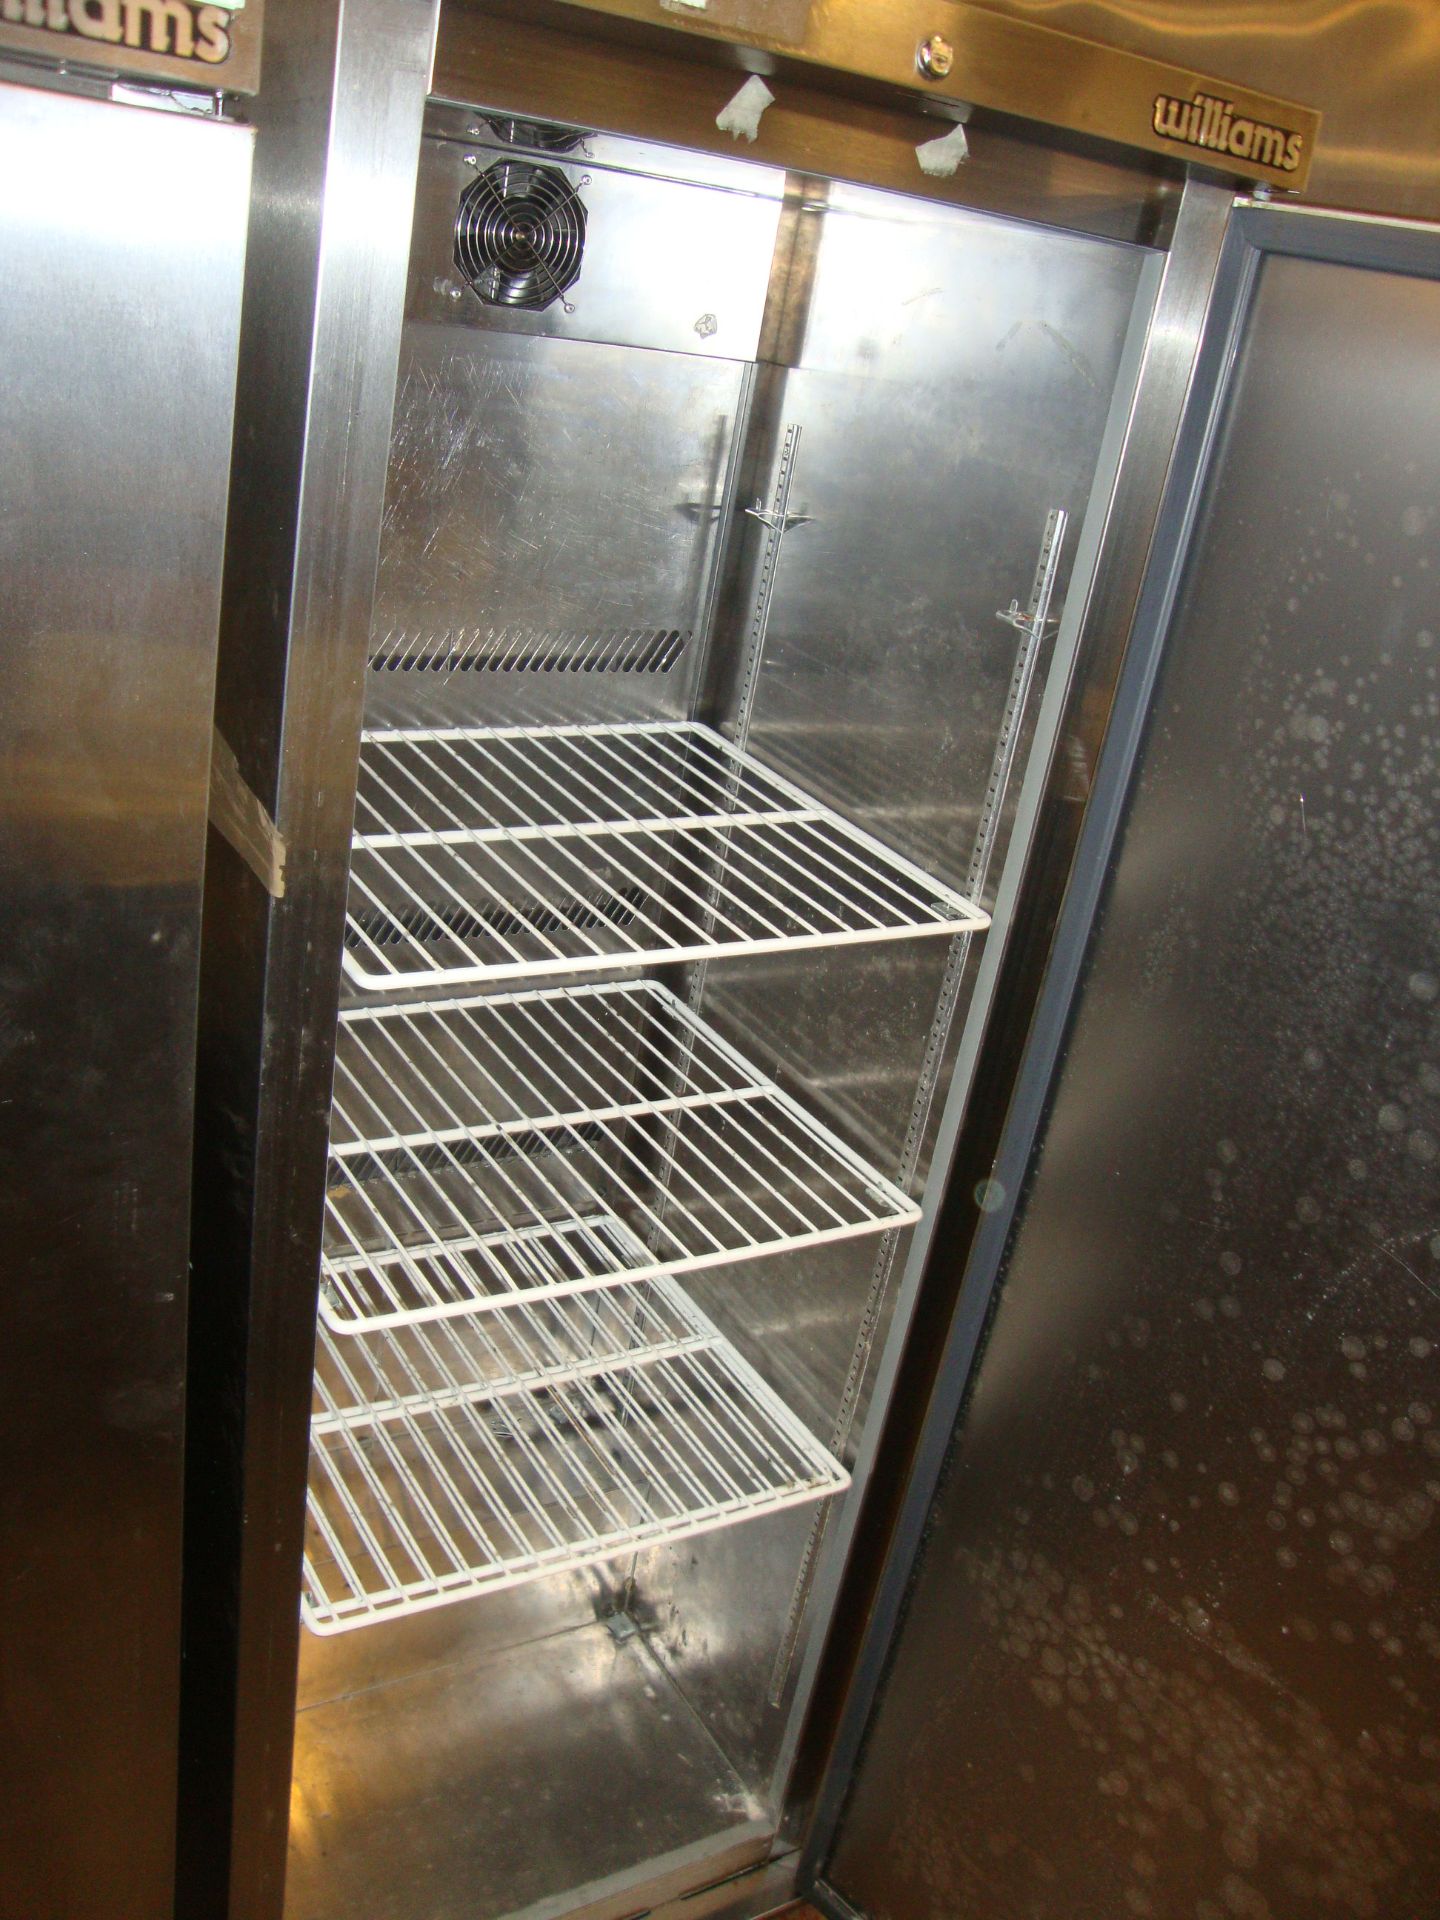 Williams HA40055 stainless steel mobile fridge - Image 3 of 3